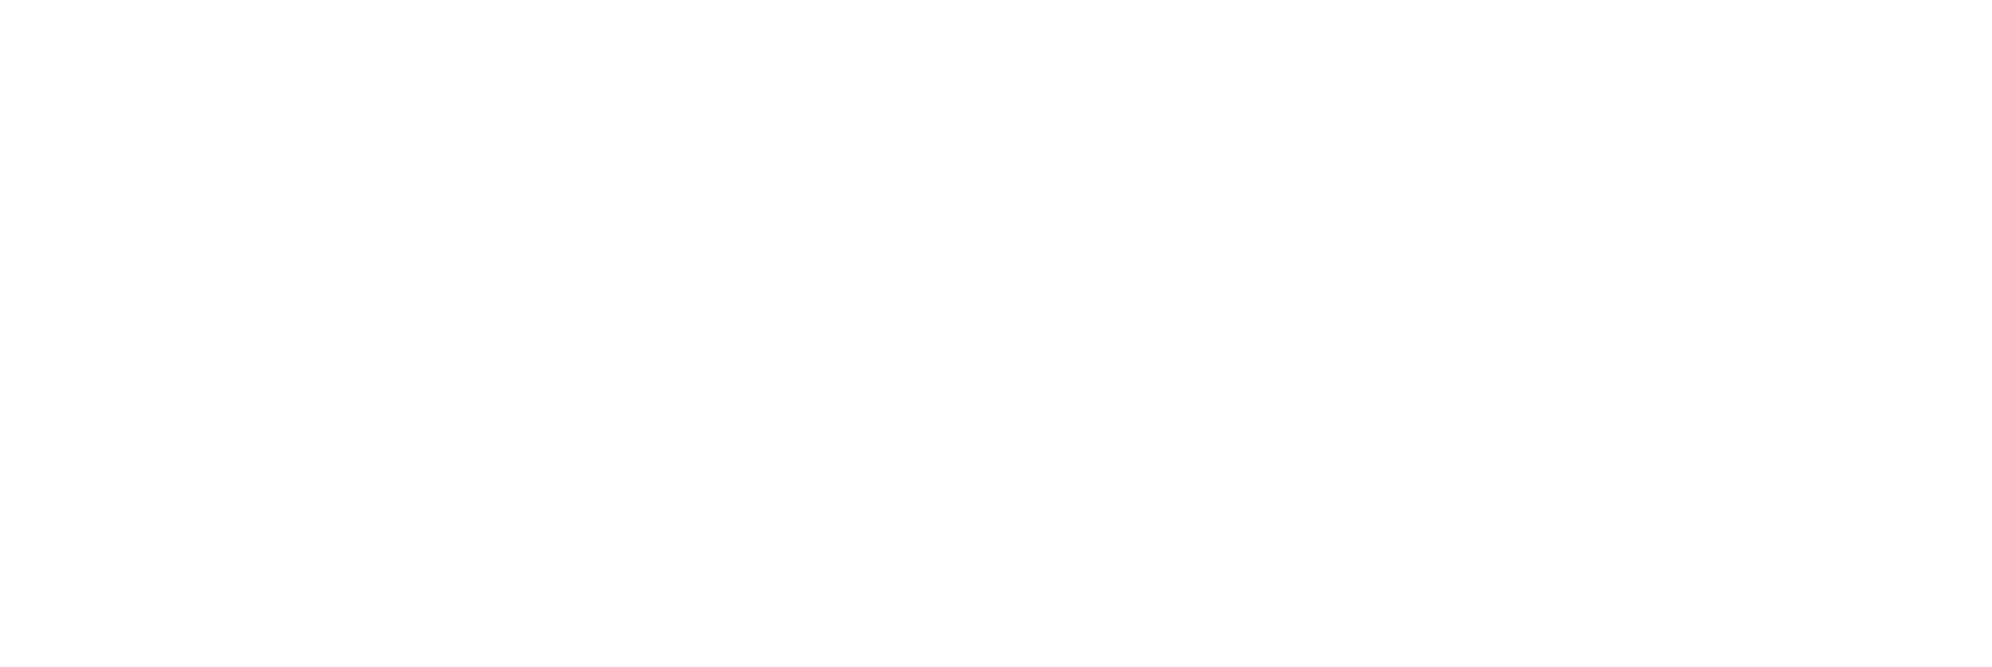 Emerson College logo that links to emerson.edu